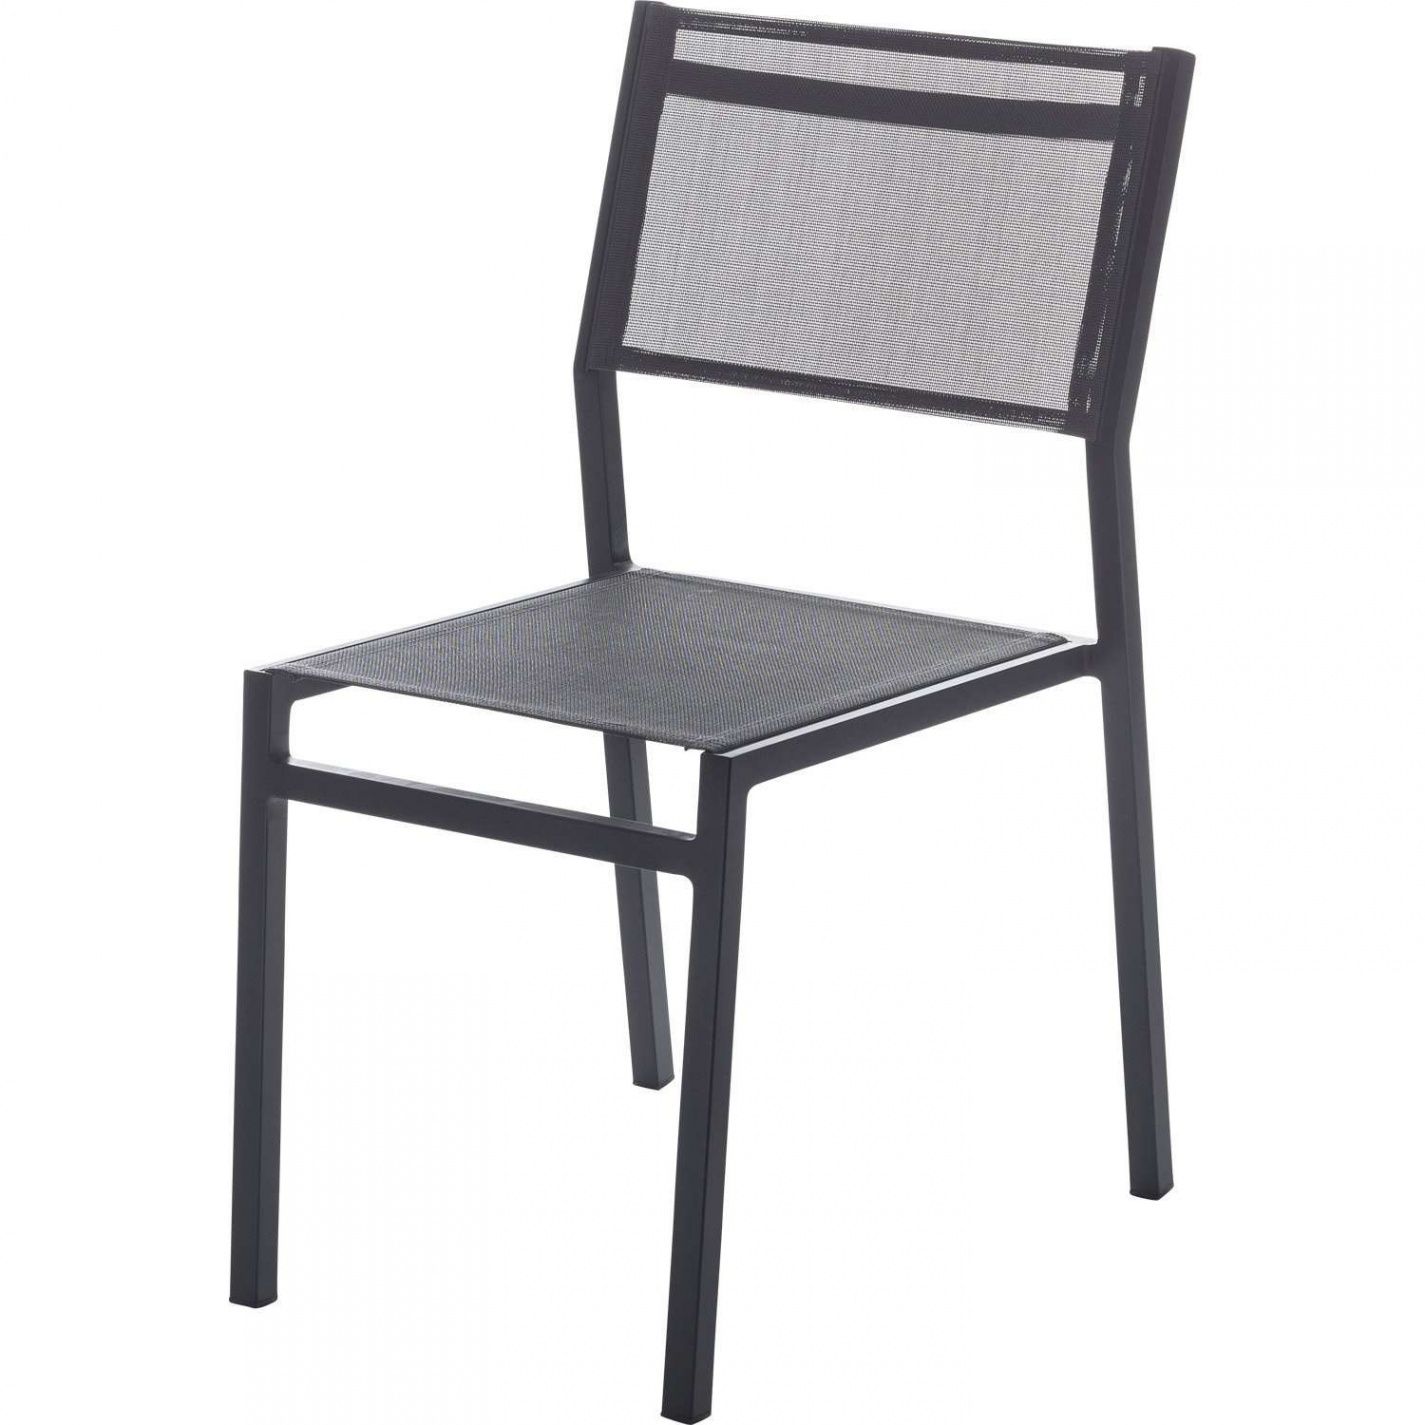 salon jardin fauteuil avec leroy merlin chaise fauteuil relax salon meilleur fauteuil salon 0d de salon jardin fauteuil